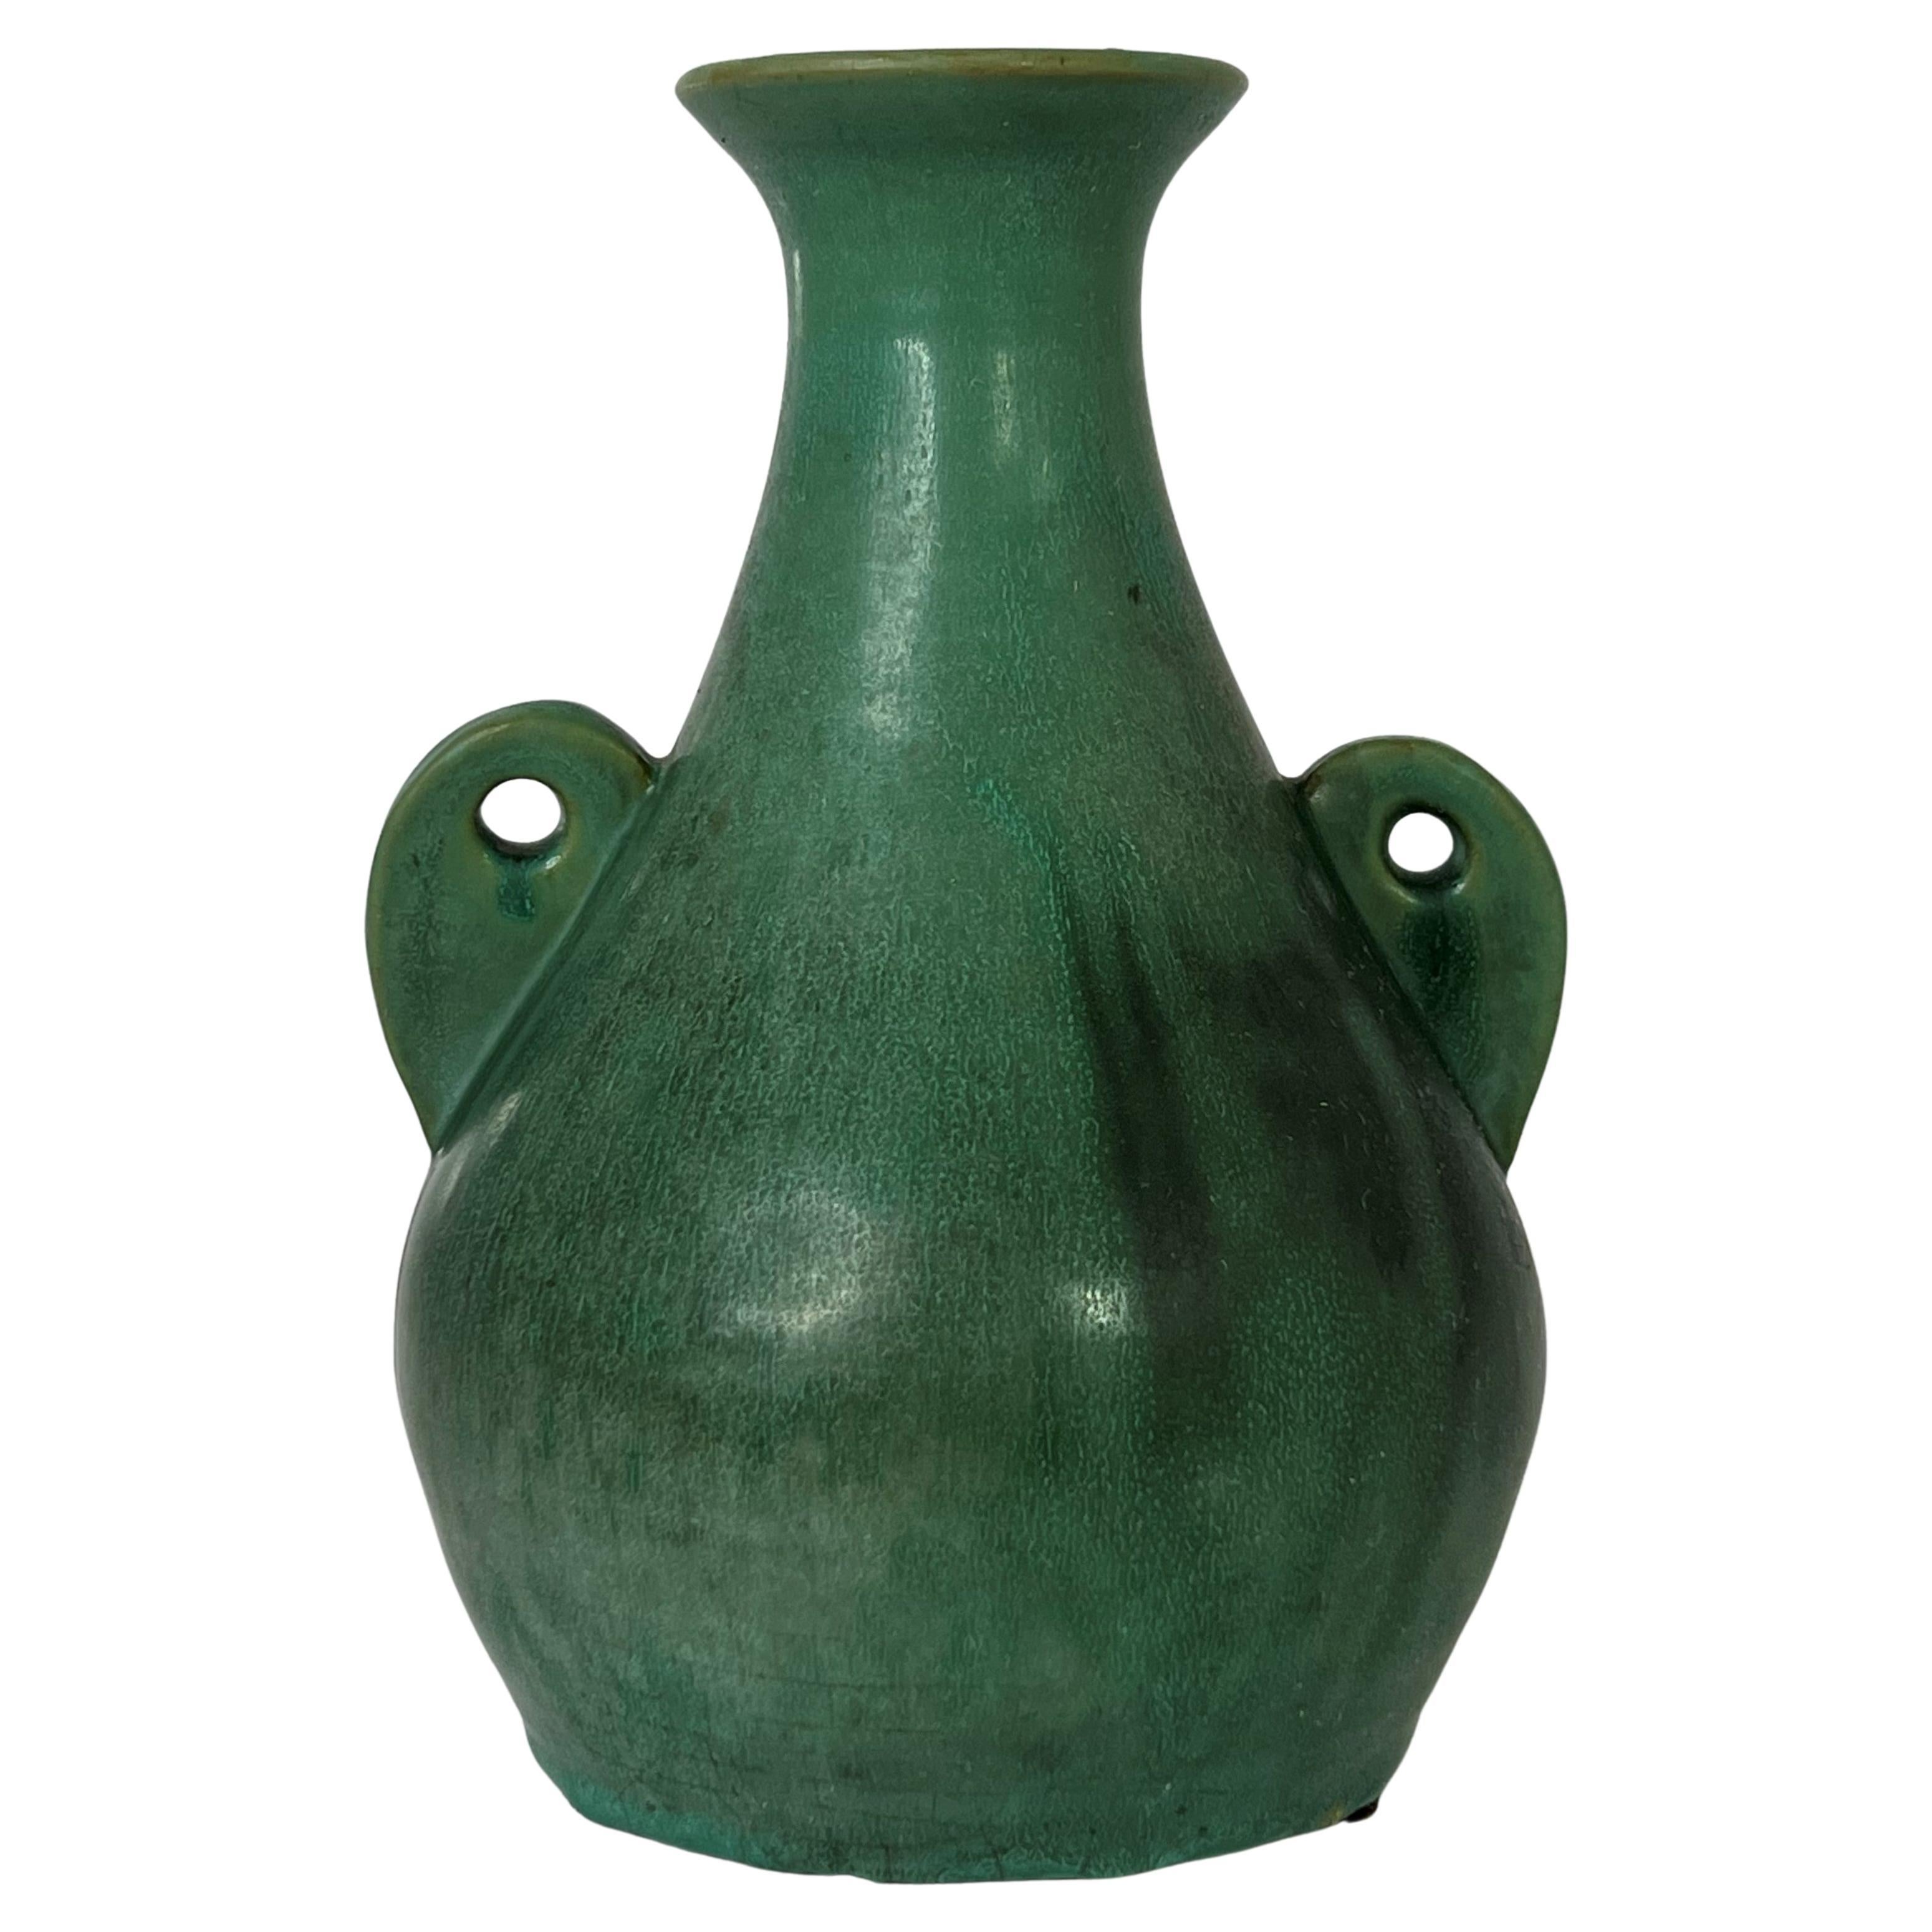 Genuine Bybee (tm) Matte Crystalline Green handled vase.